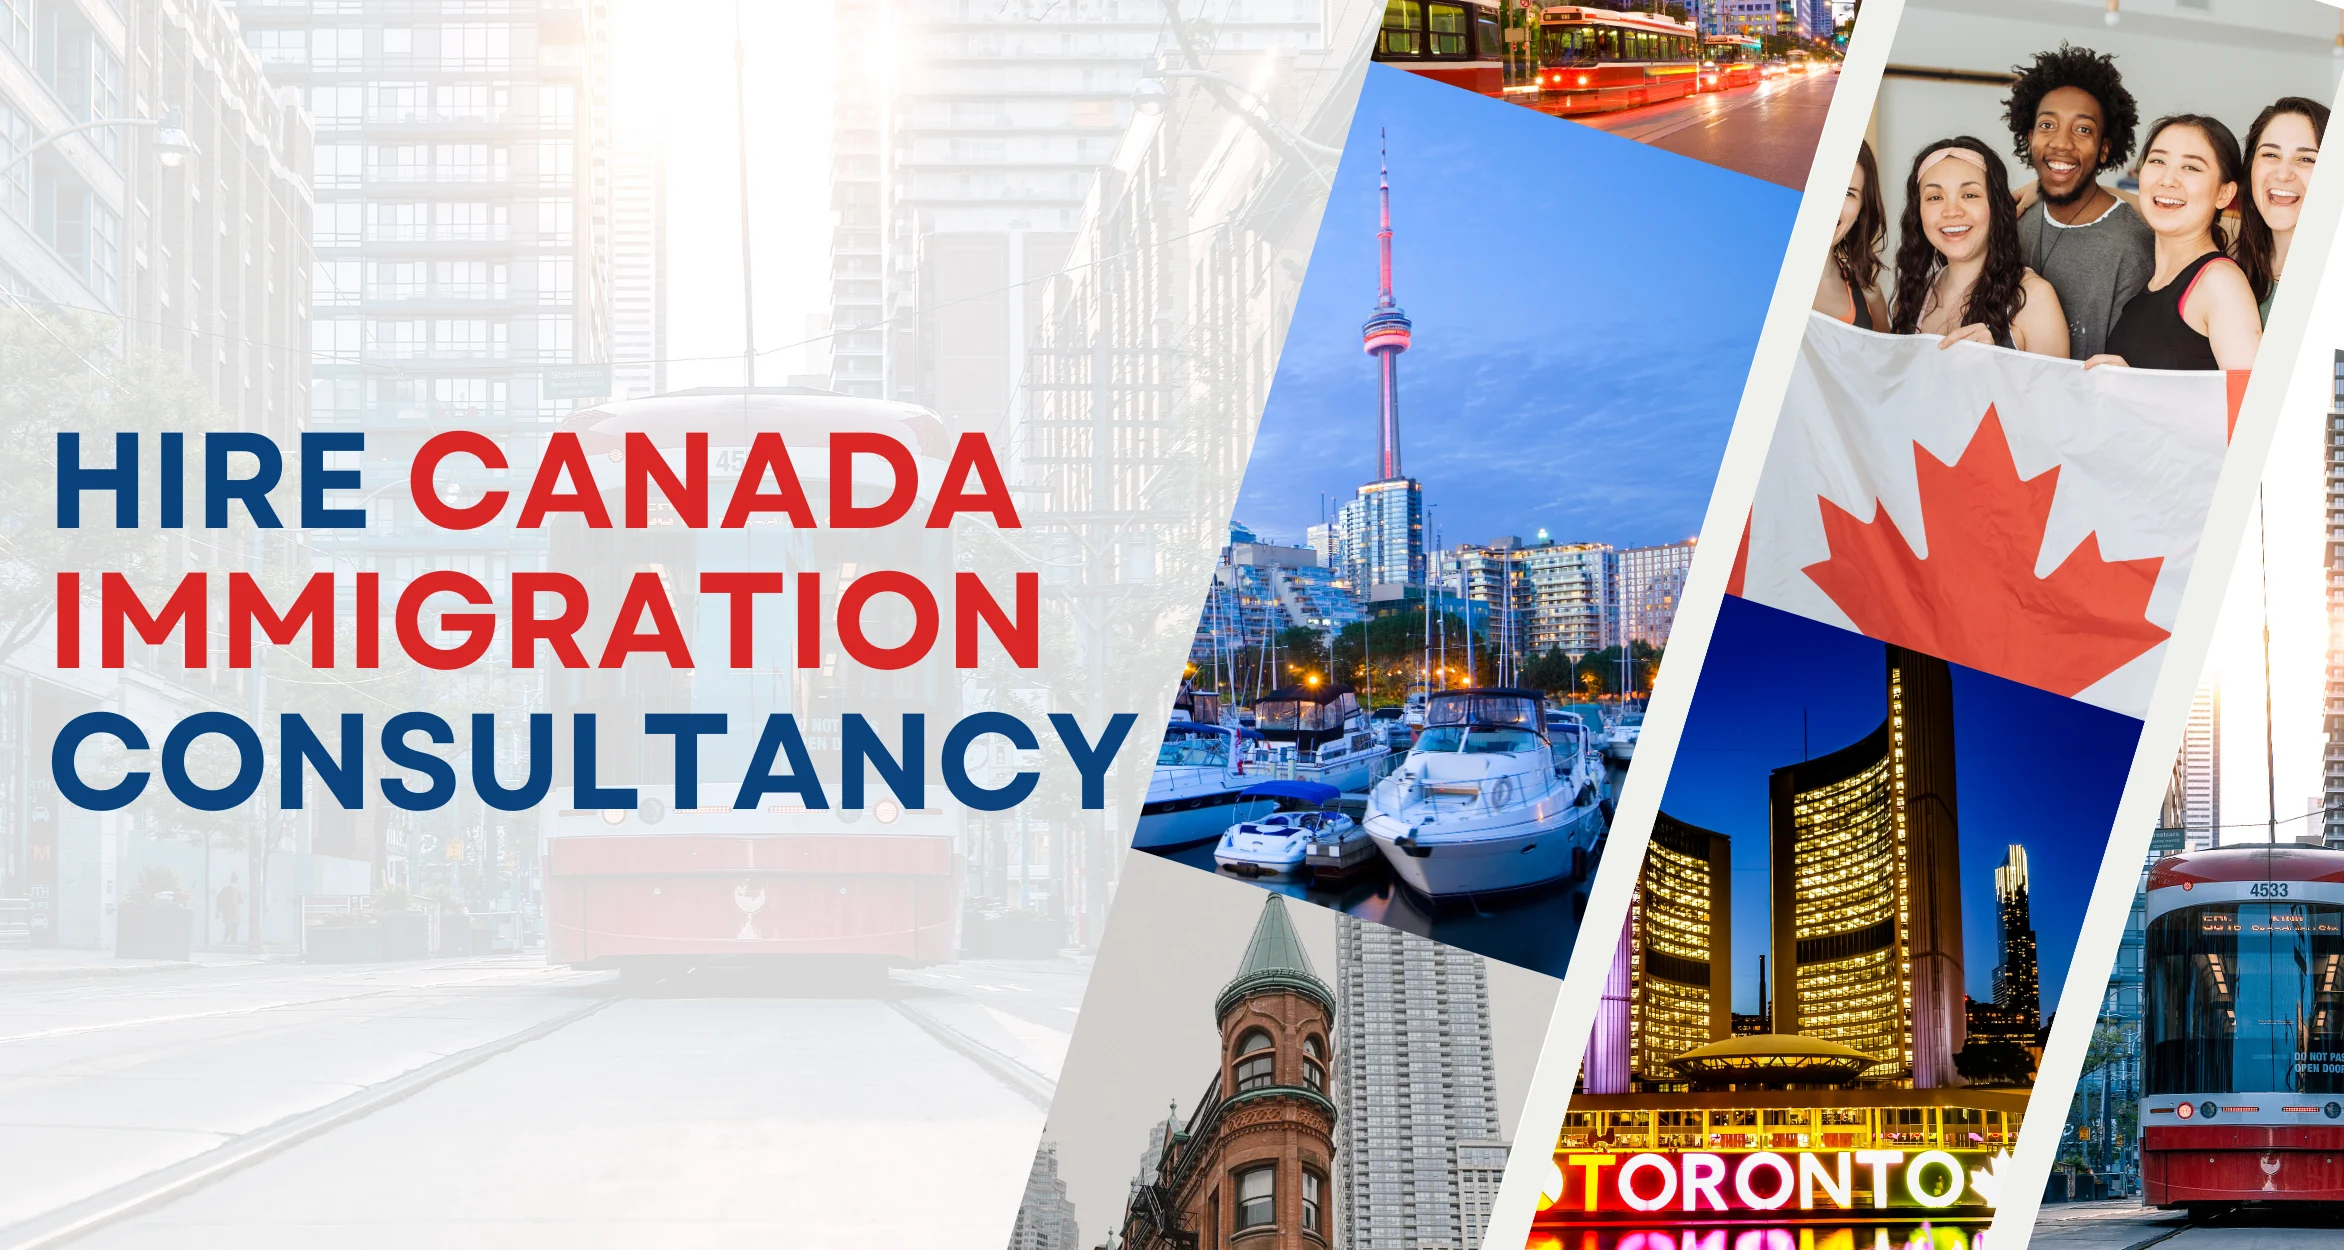 Hire Canada immigration consultancy